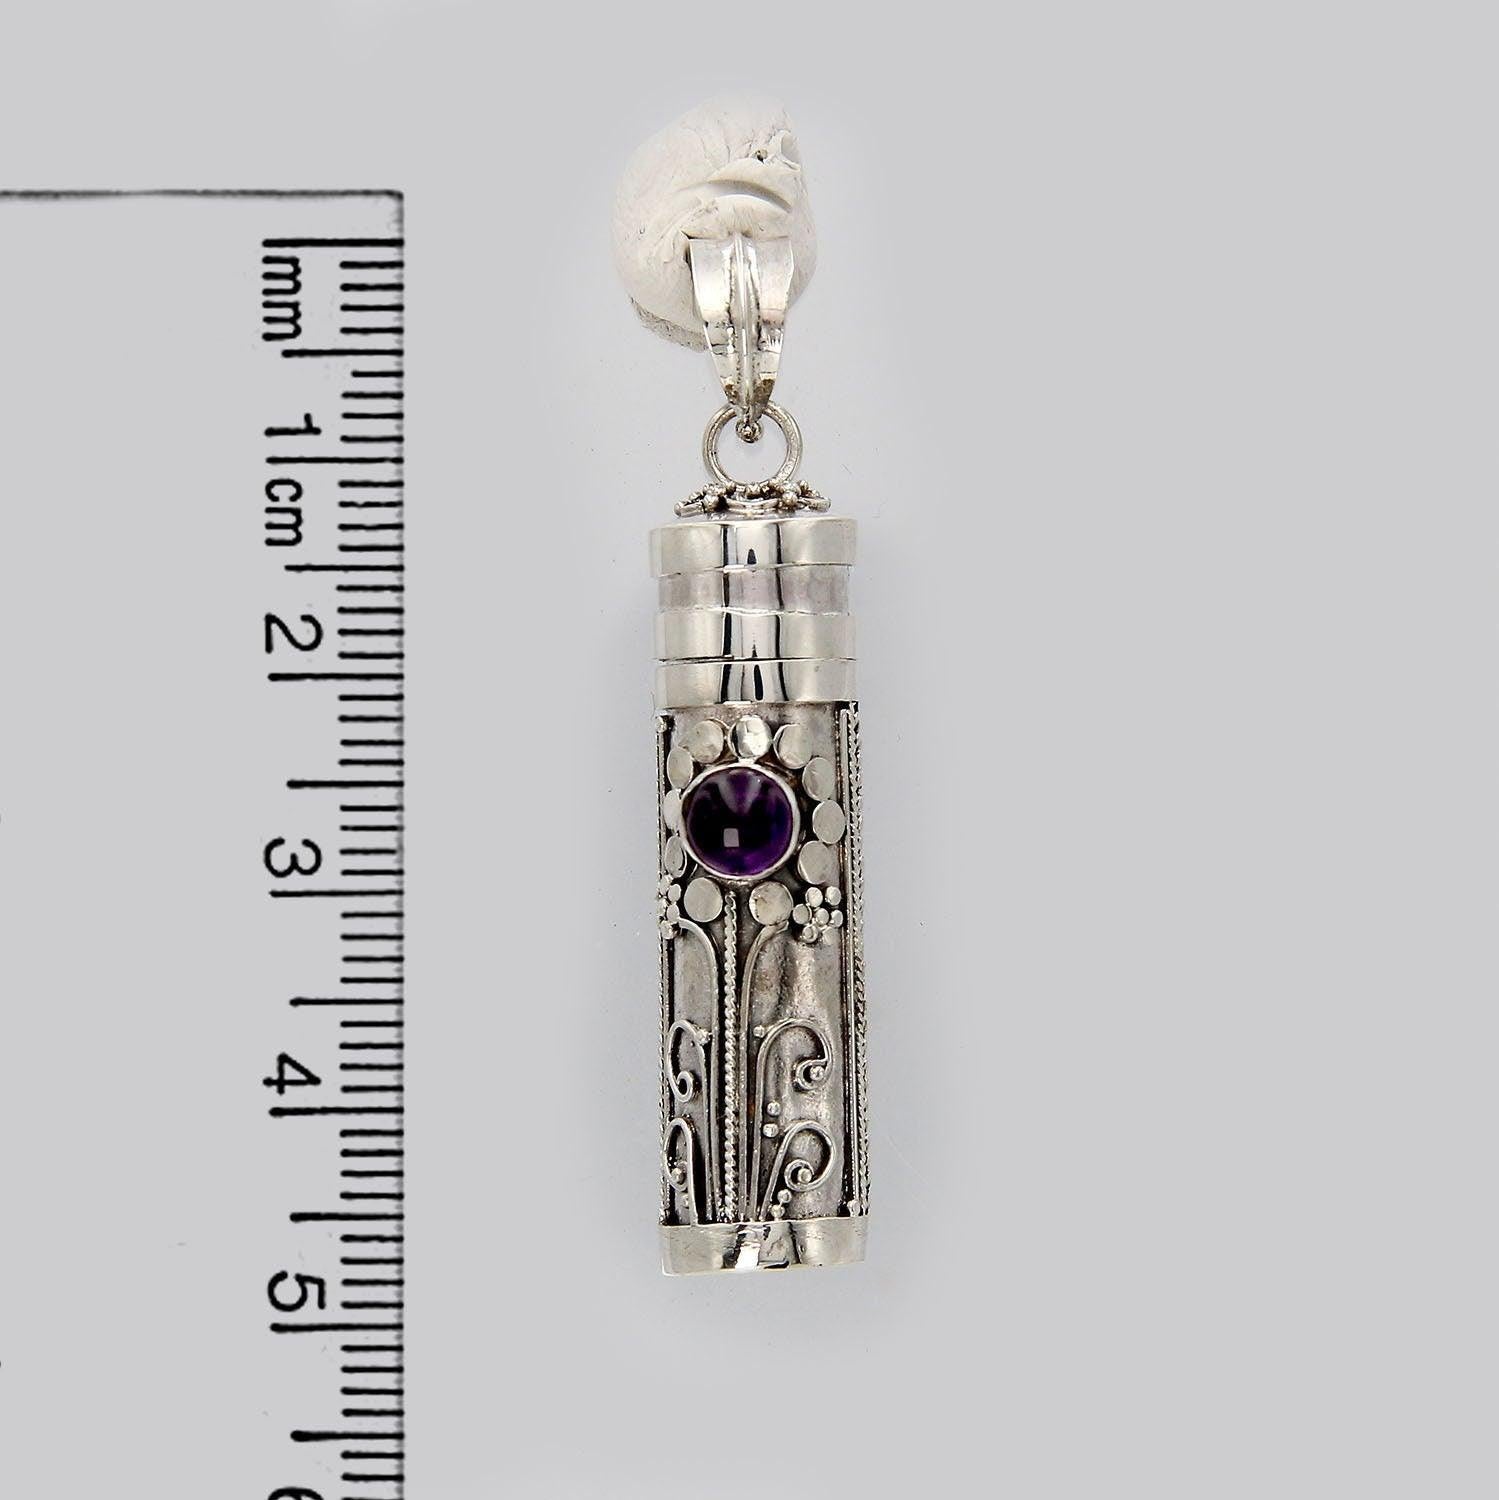 Prayer Box - Pill Box - Perfume Bottle Pendant - Ashes Locket Pendant - 925 Sterling Silver - Handmade Locket Pendant - Inspiring Jewellery